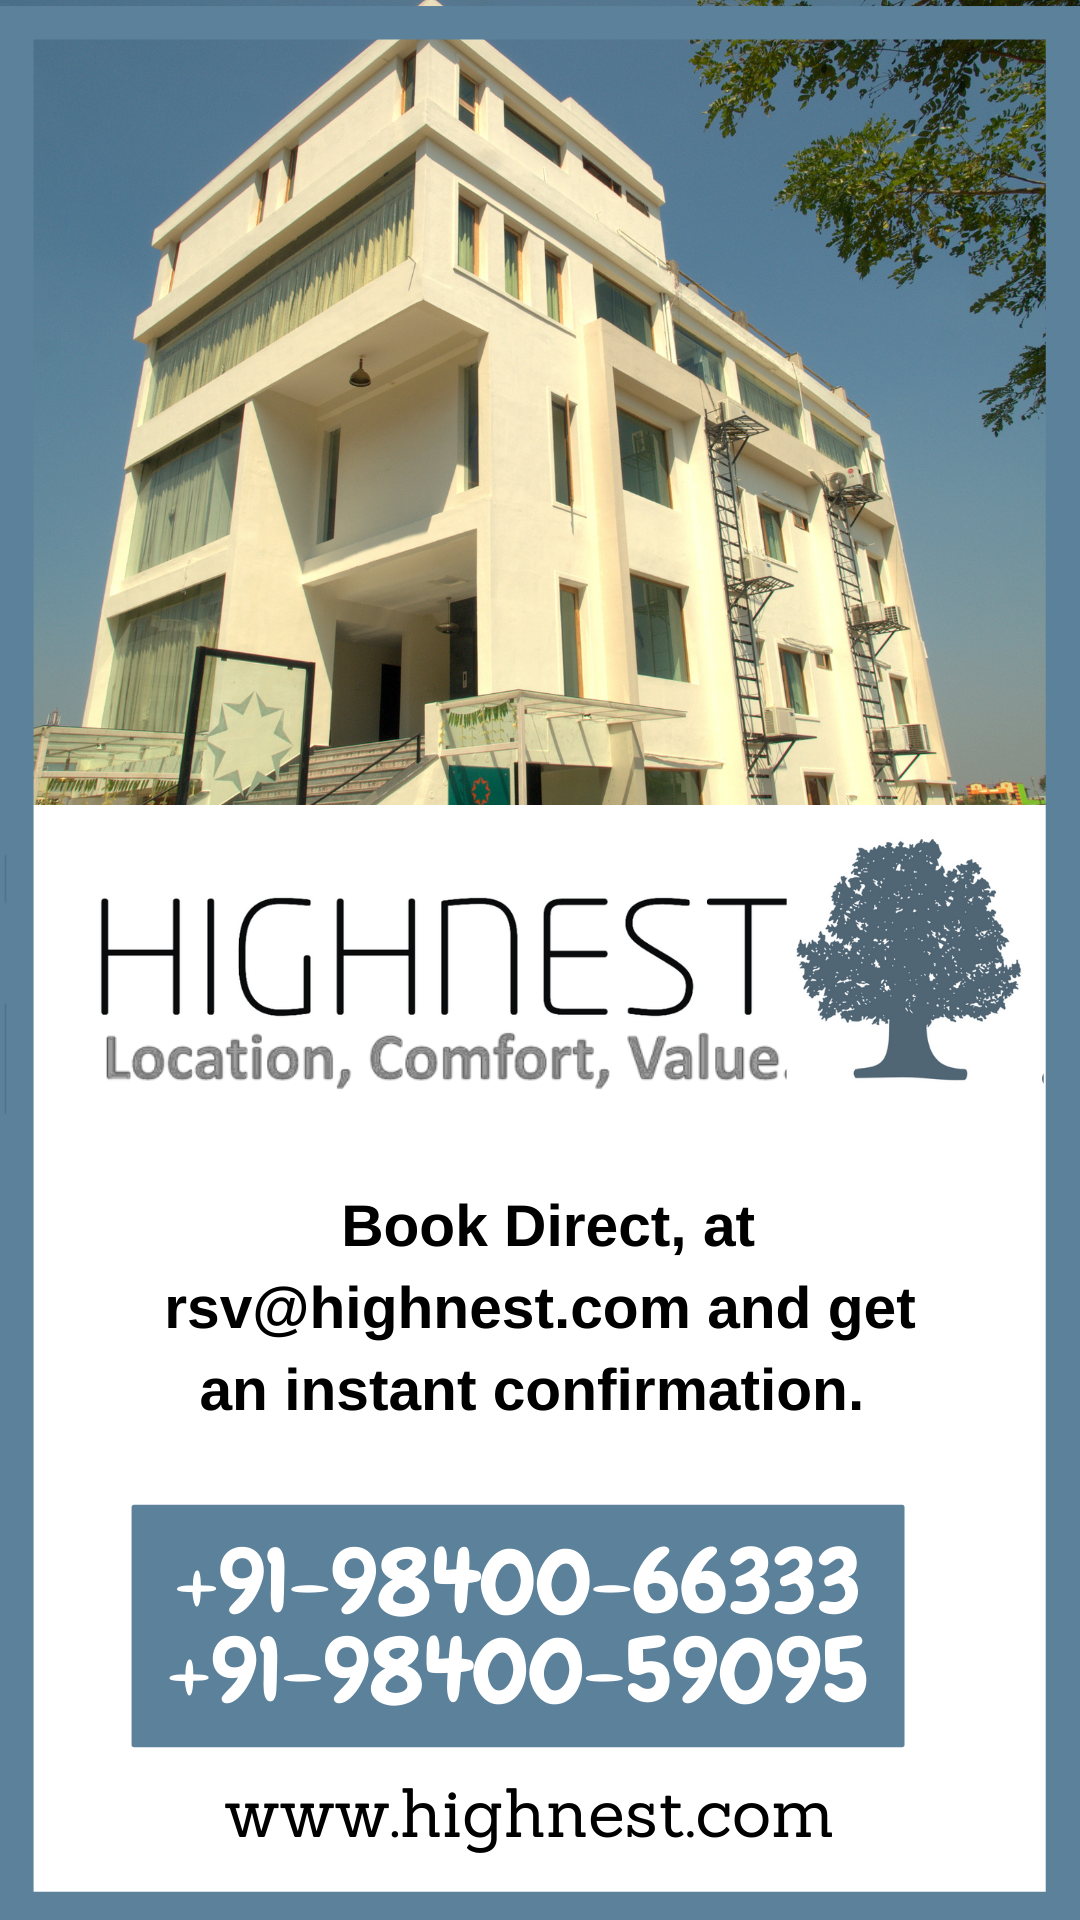 Hotel Highnest, Near Mahindra world city, SP Koil